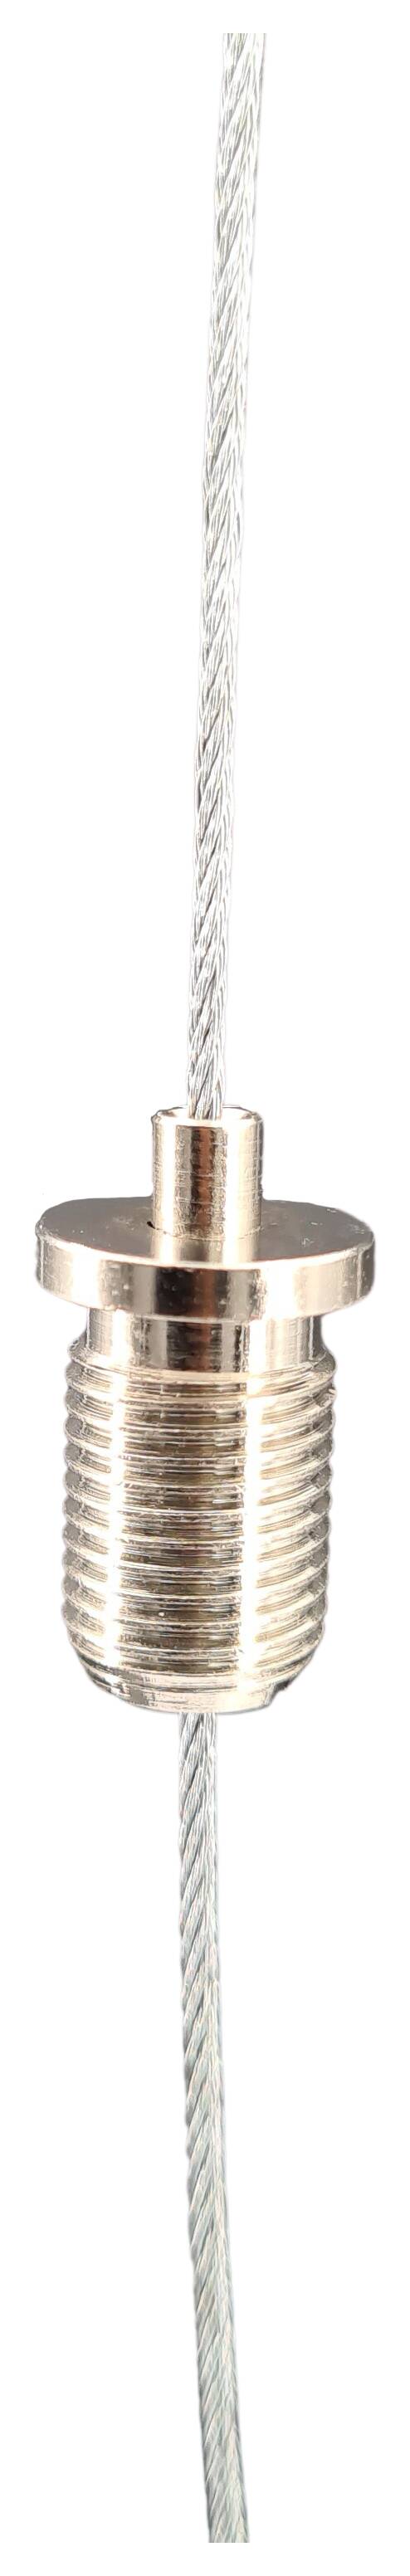 brass cableblocker with collar 12x17 M10x1x15 male nickel